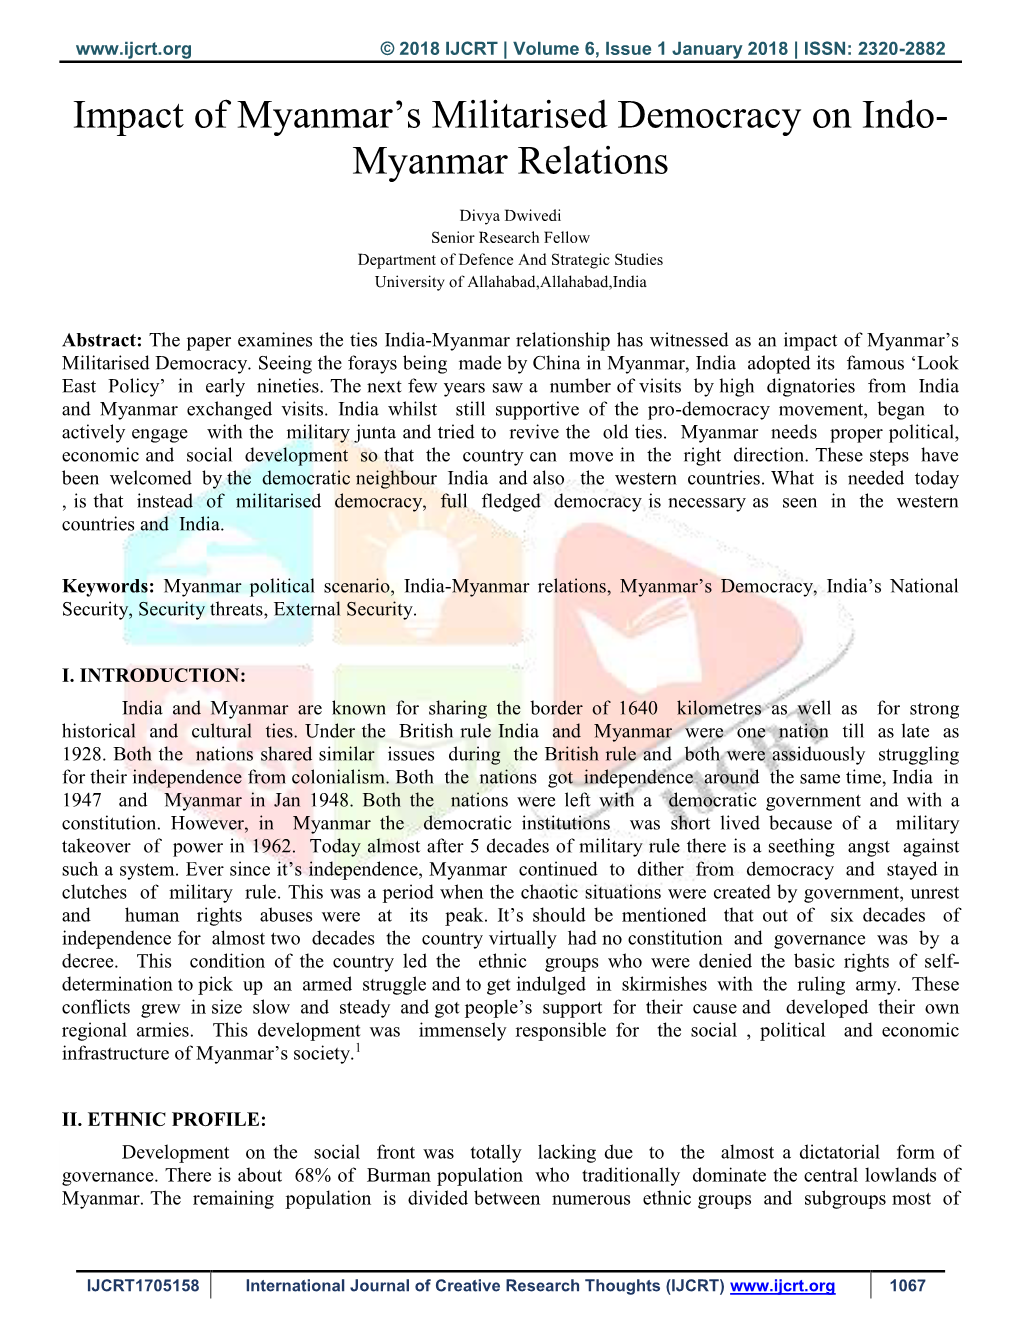 Myanmar Relations